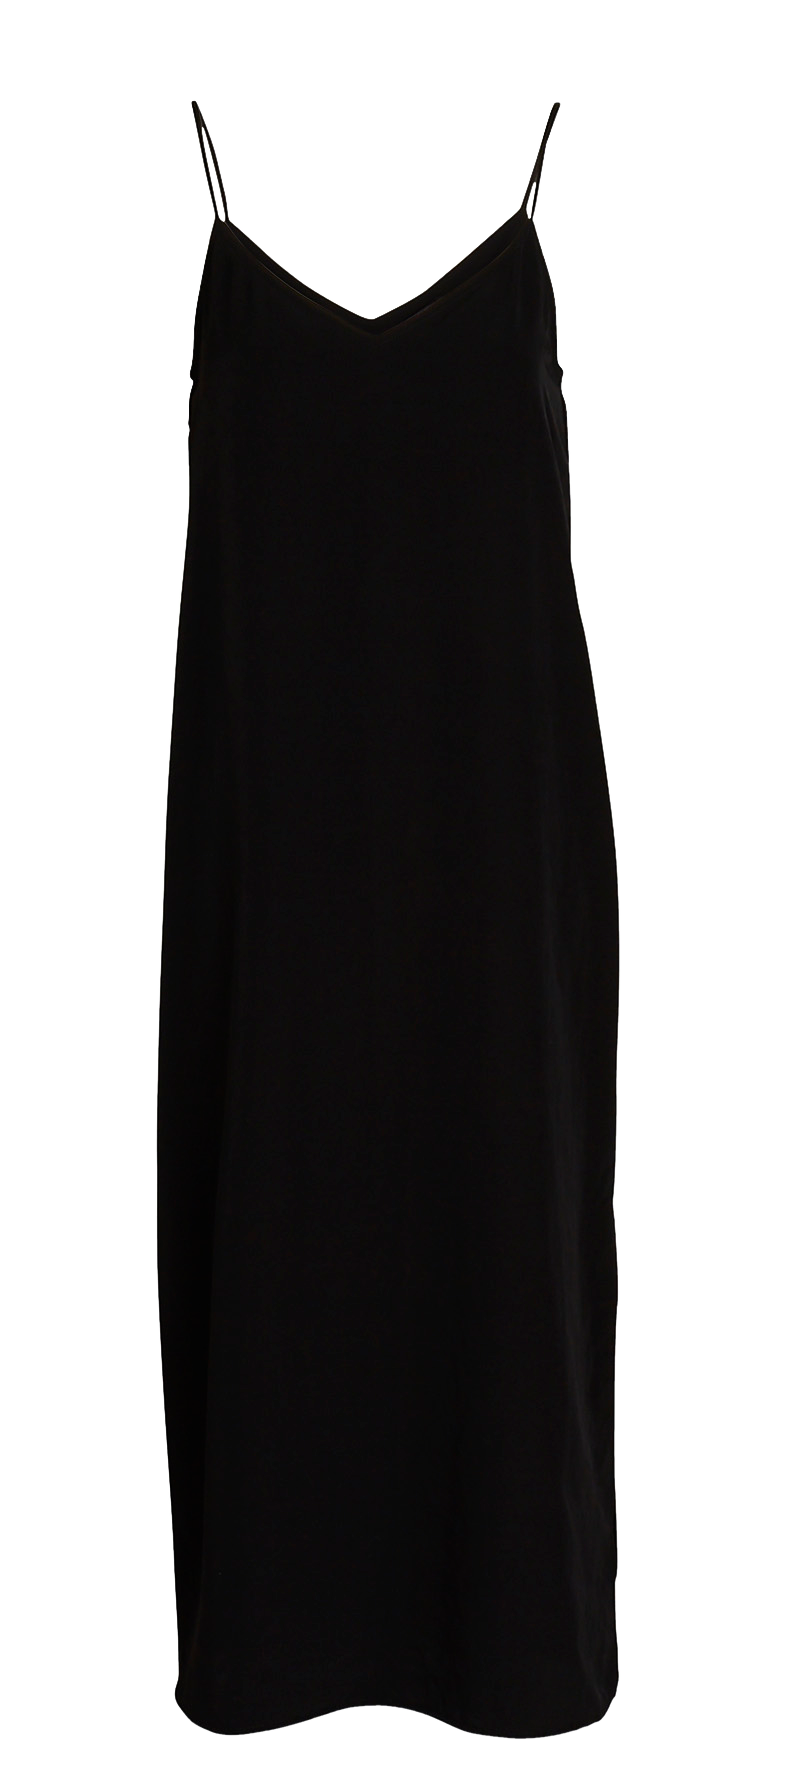 black slip dress with white shirt